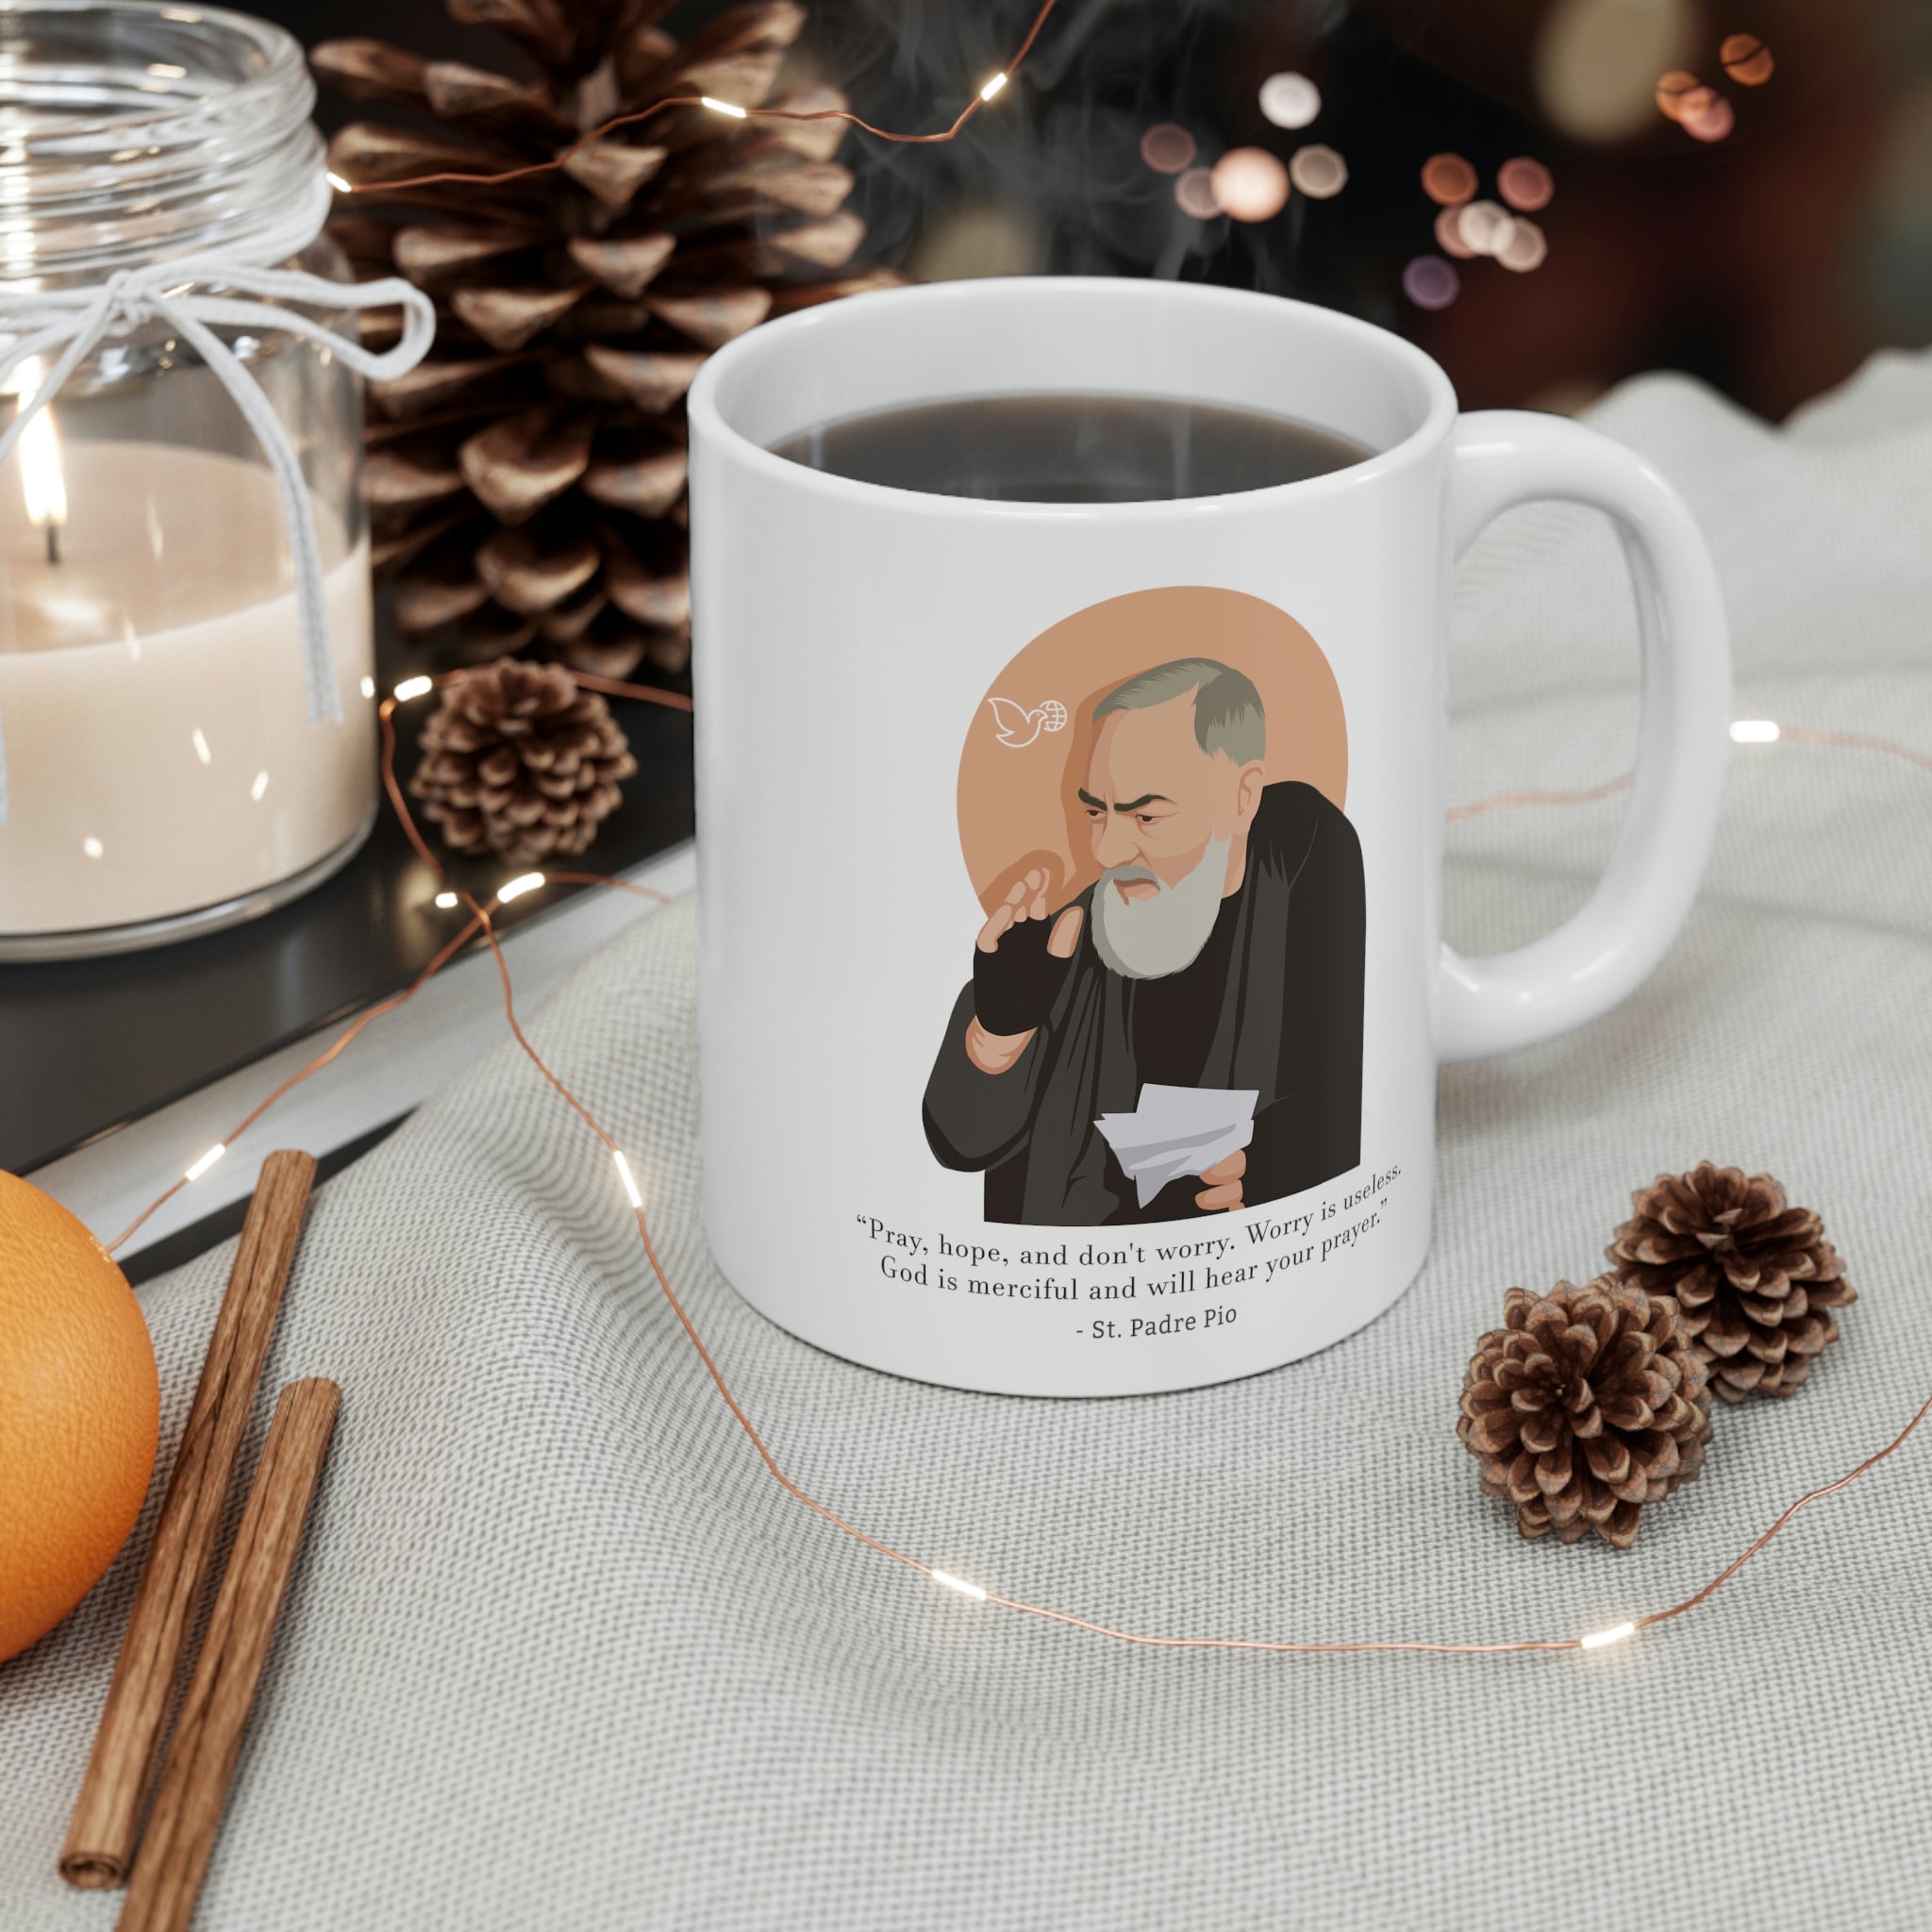 Saint Padre Pio Coffee Mug